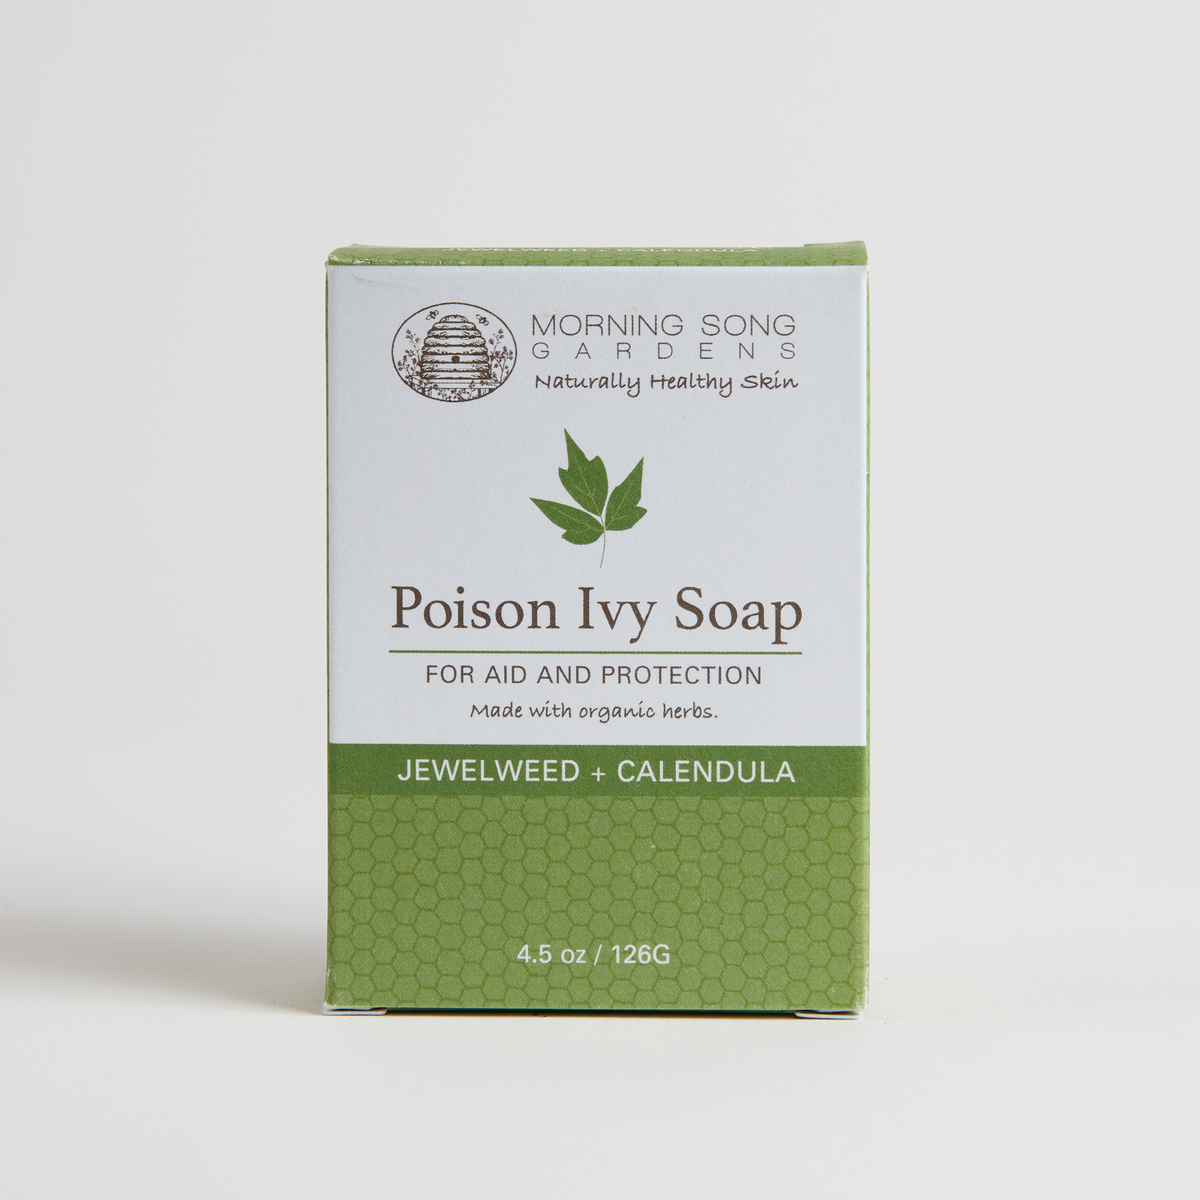 Morning Song Gardens Poison Ivy Soap - 4.5 Oz